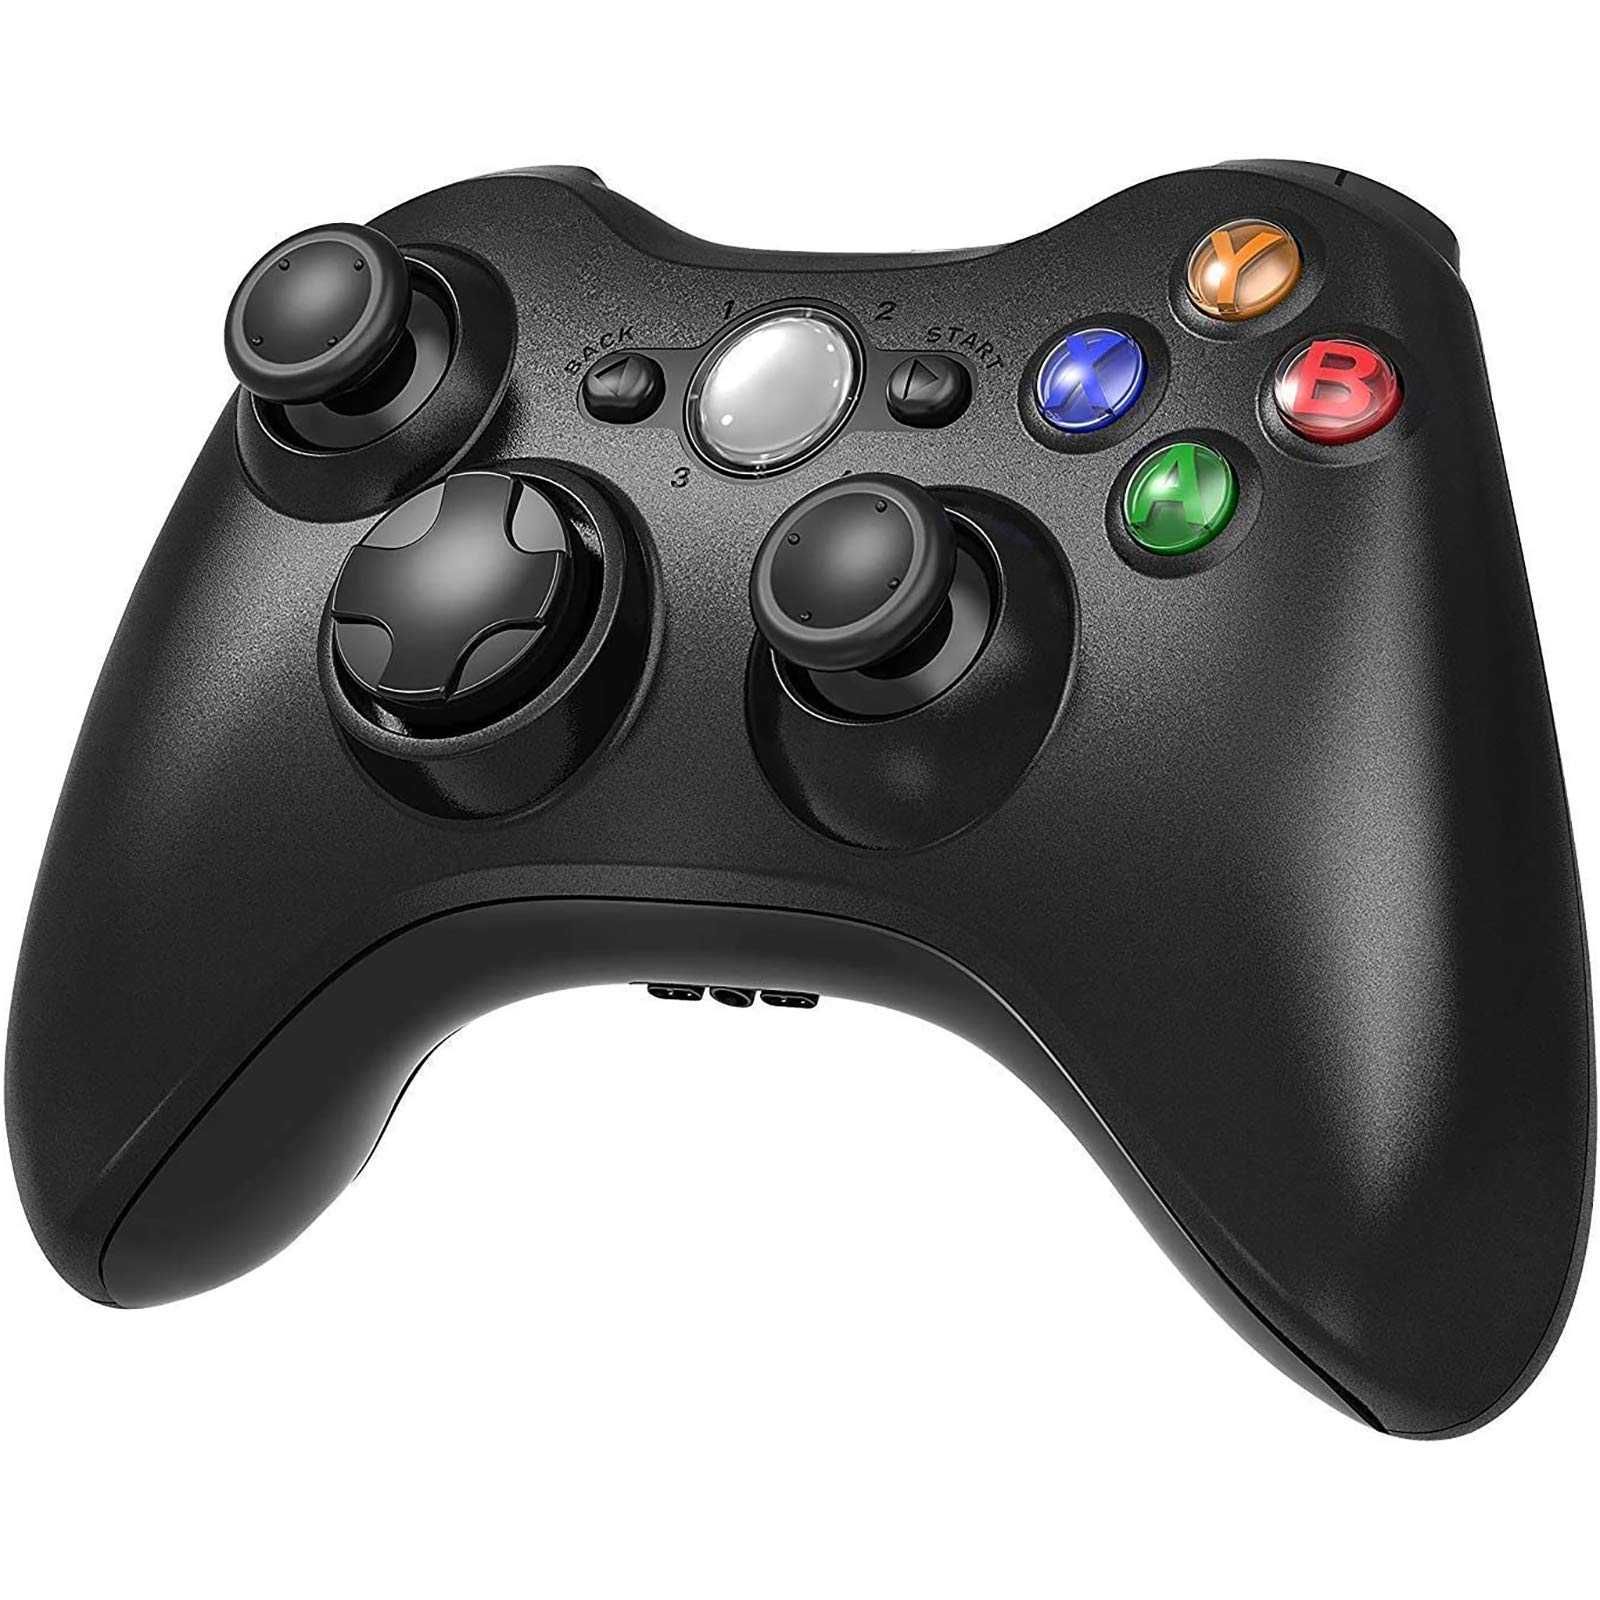 За Xbox 360 безжичен Контролер/Джойстик/Геймпад чистонов